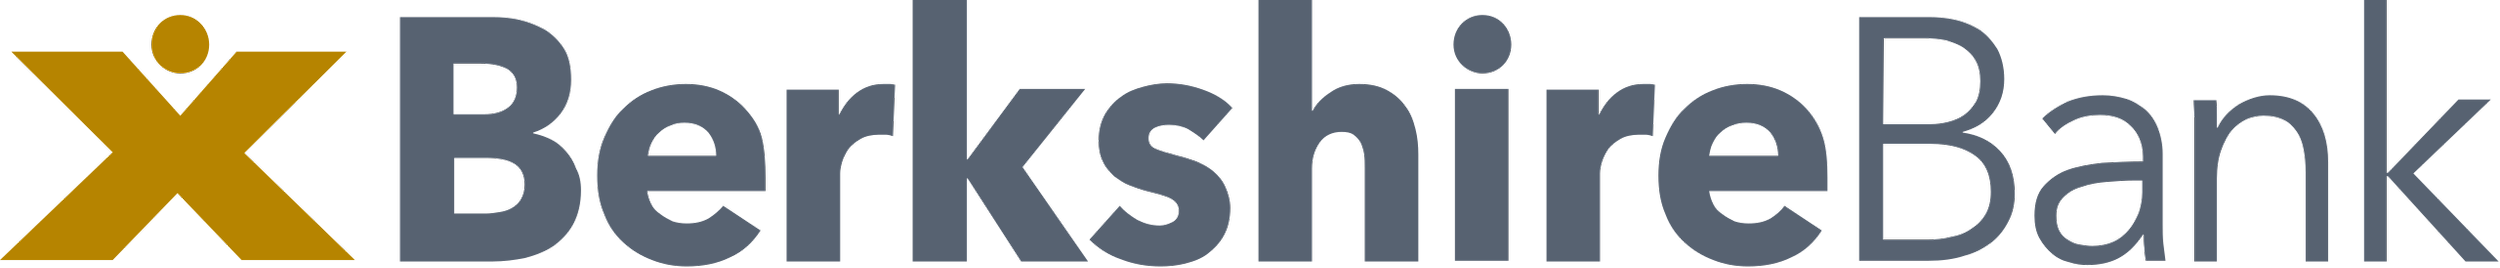 Berkshire_Bank_logo.svg.png